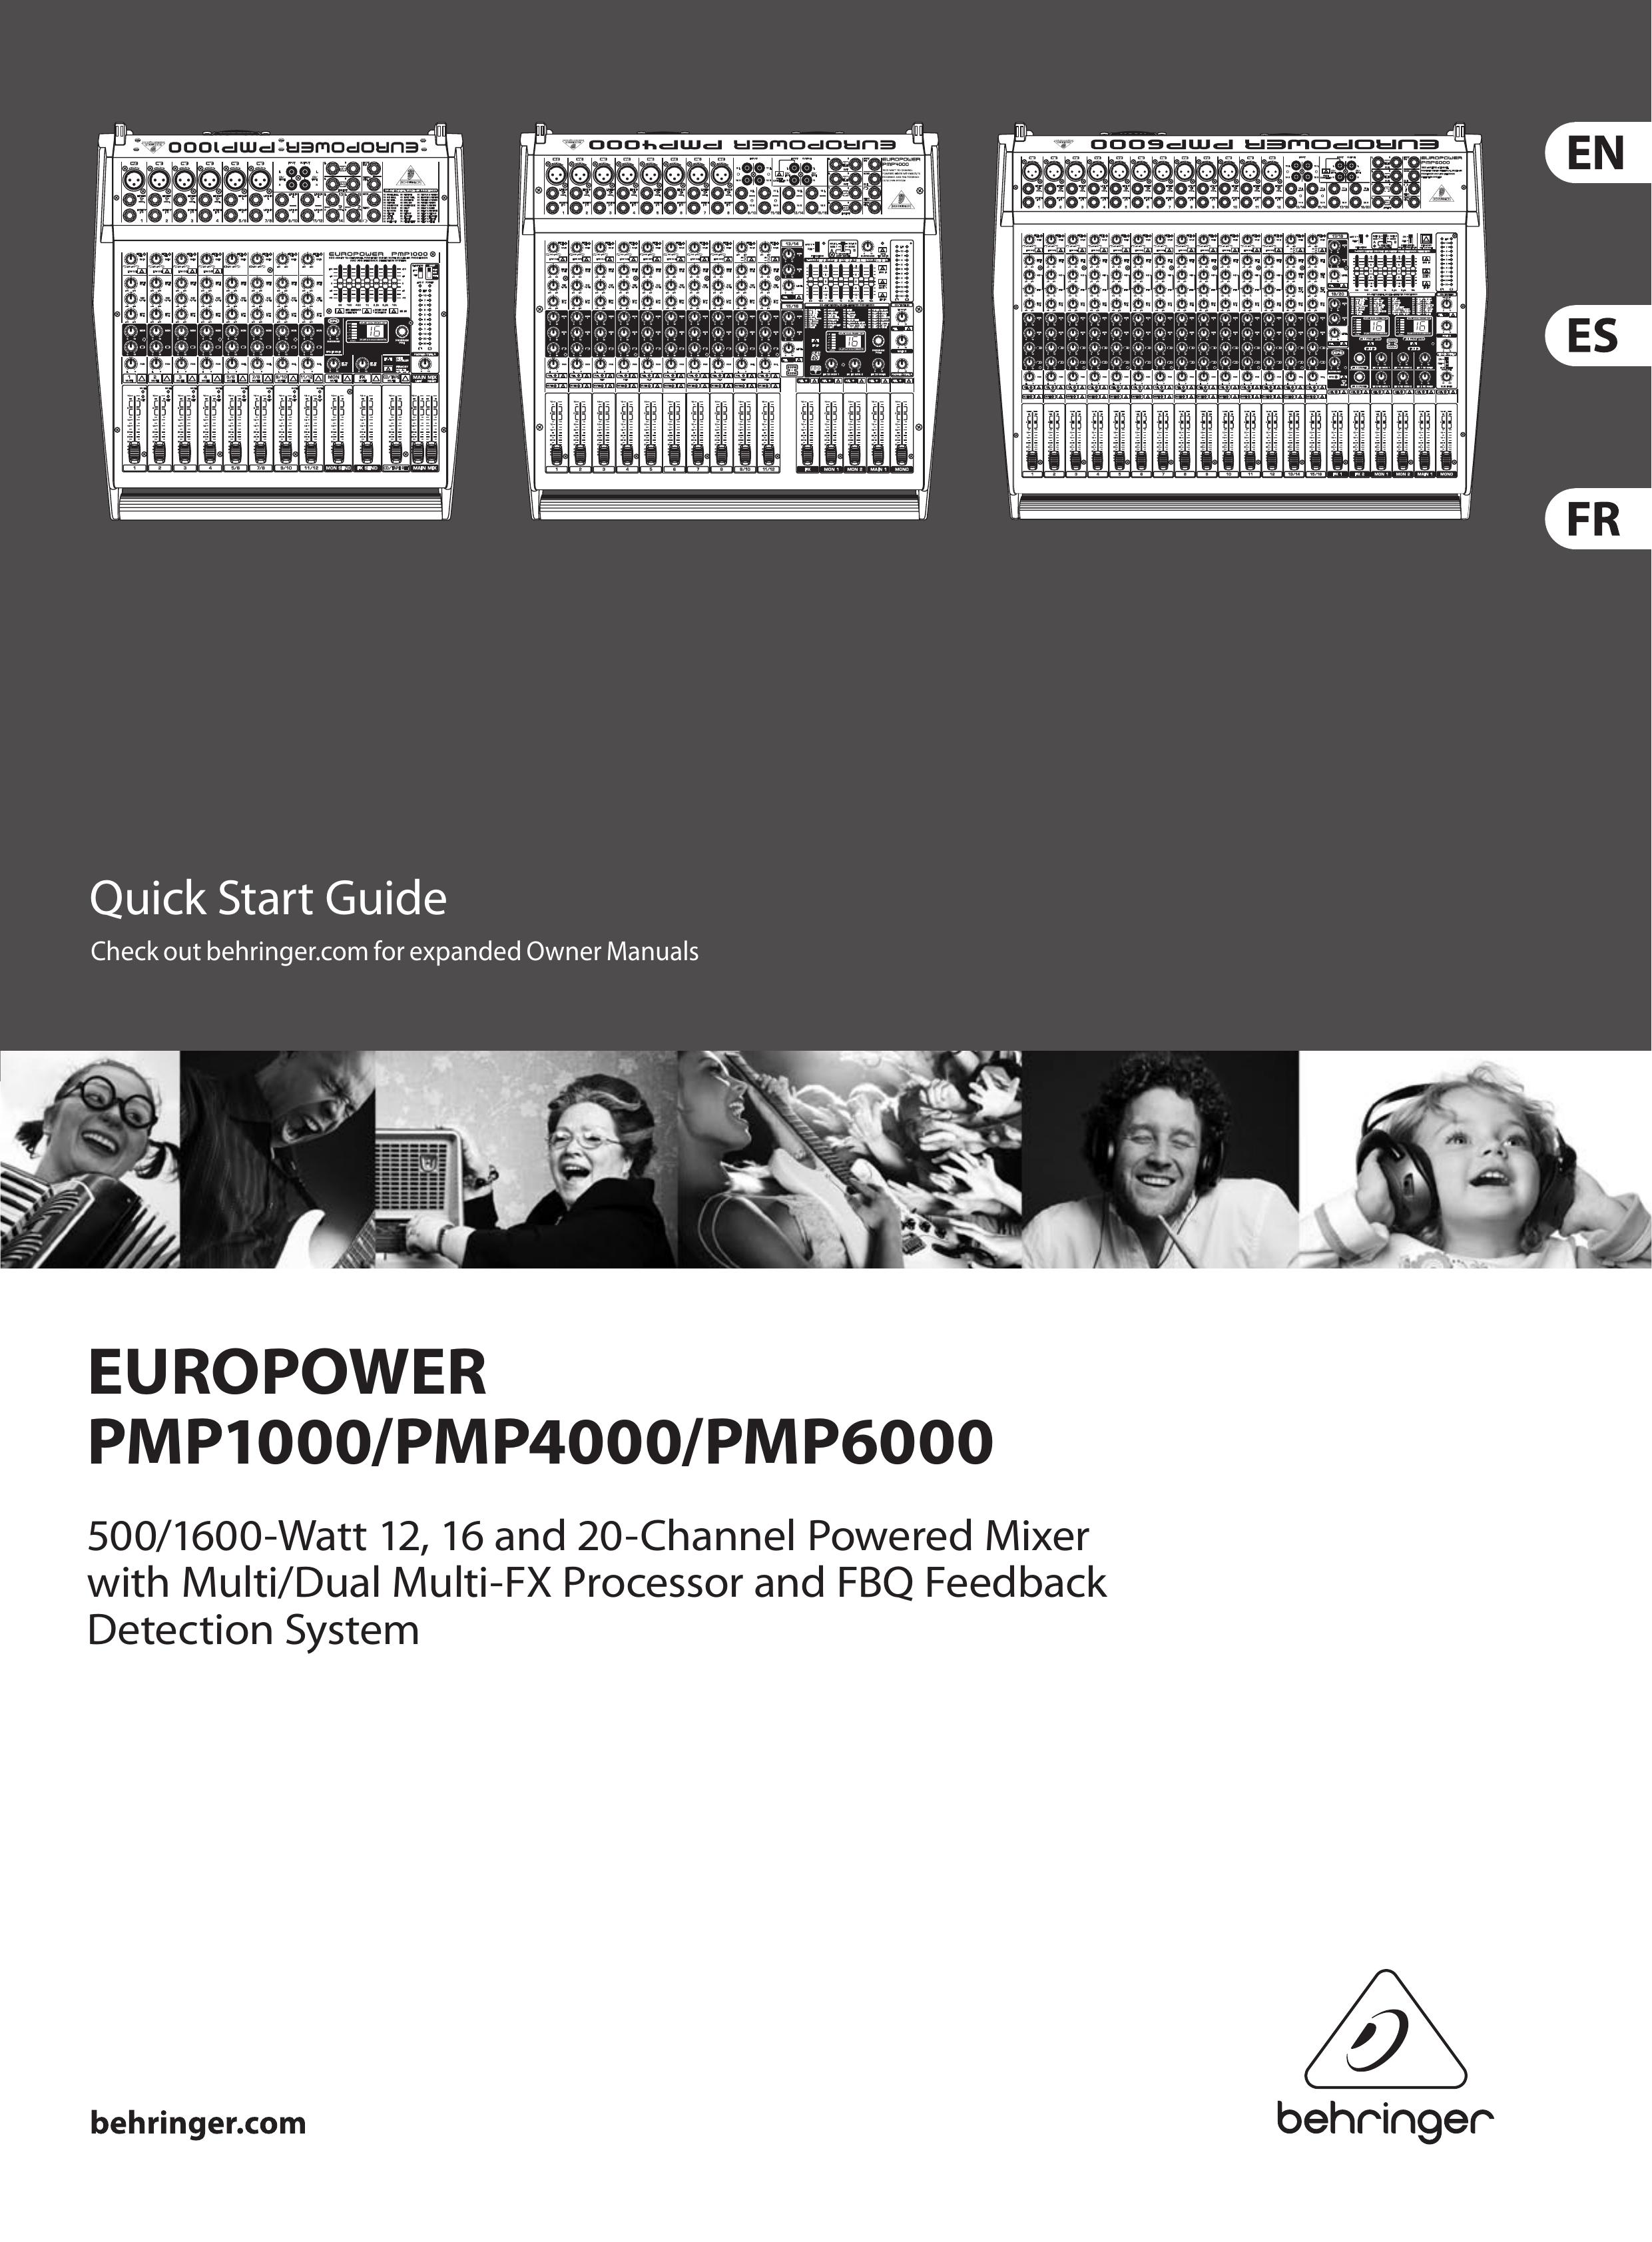 Behringer PMP6000 Music Mixer User Manual